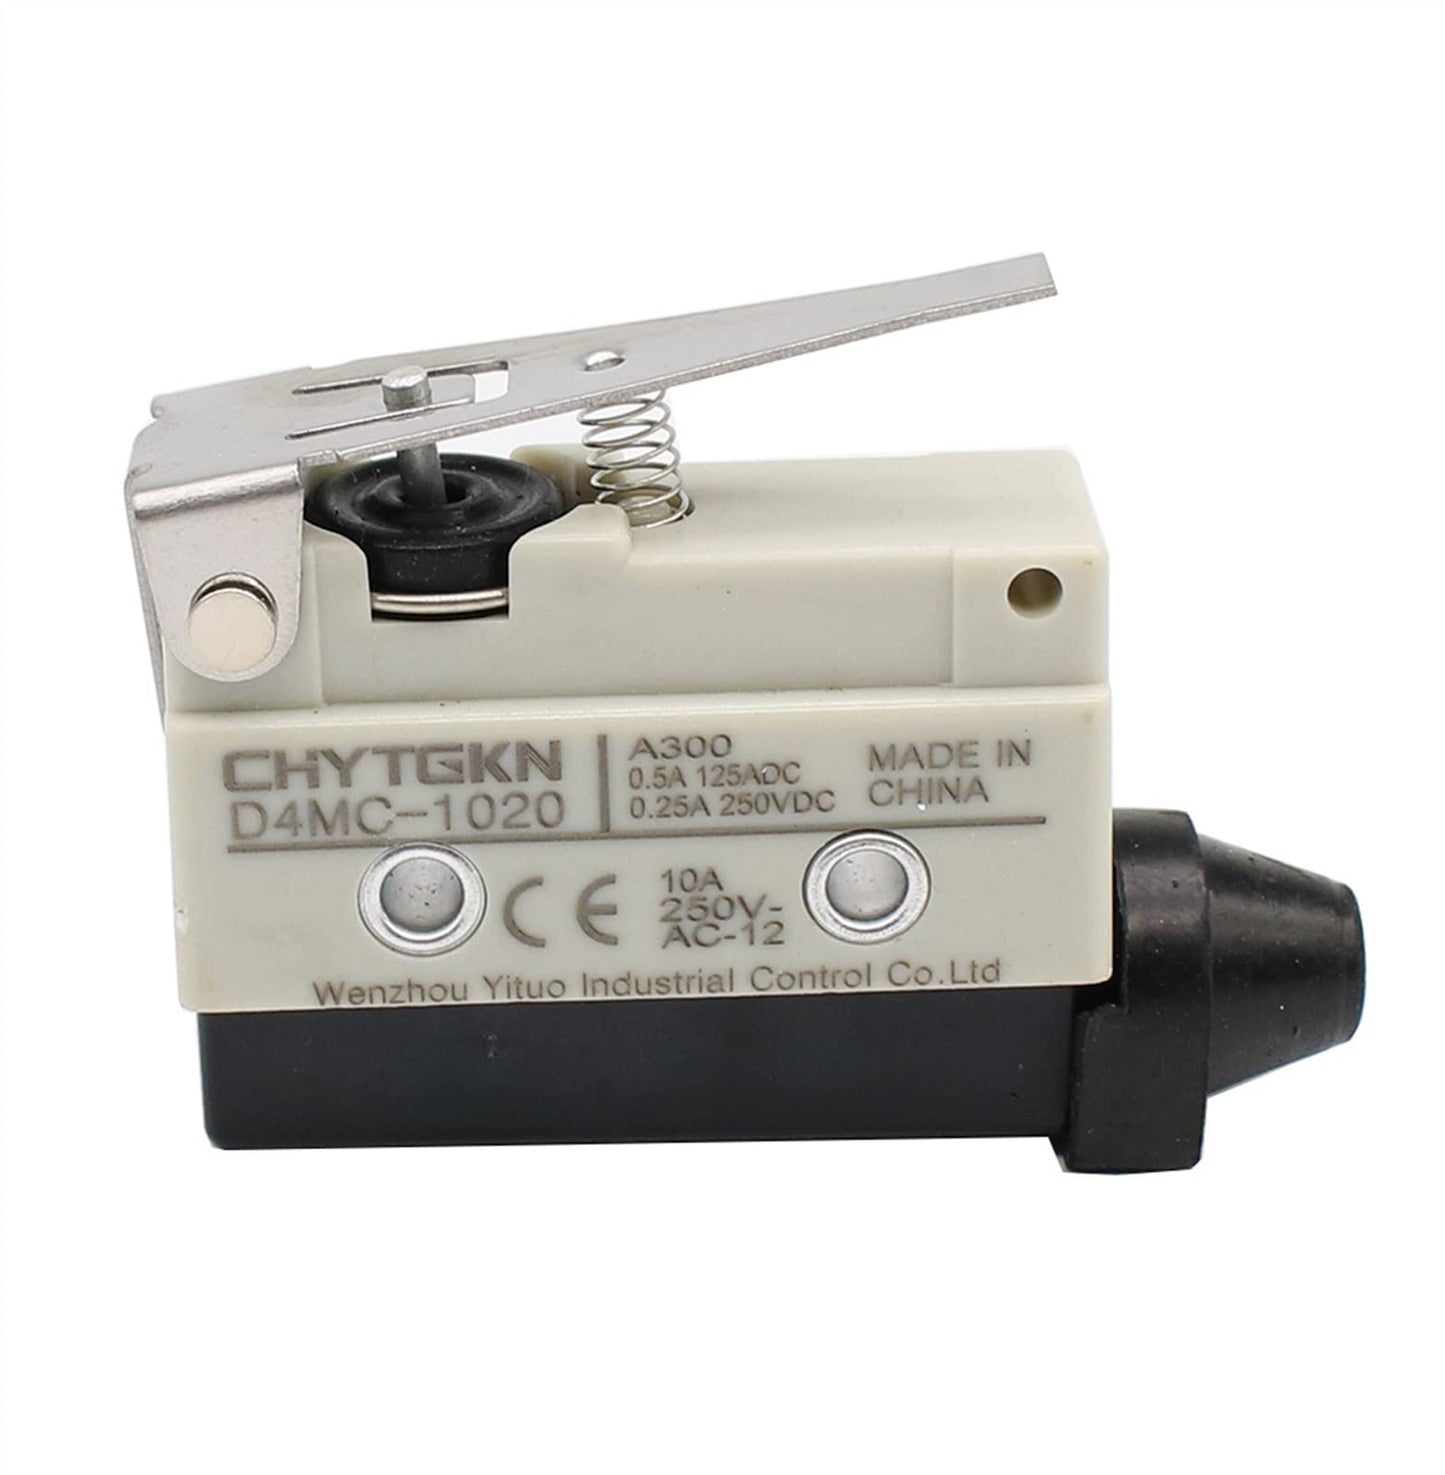 D4MC-1020 Micro Limit Switch